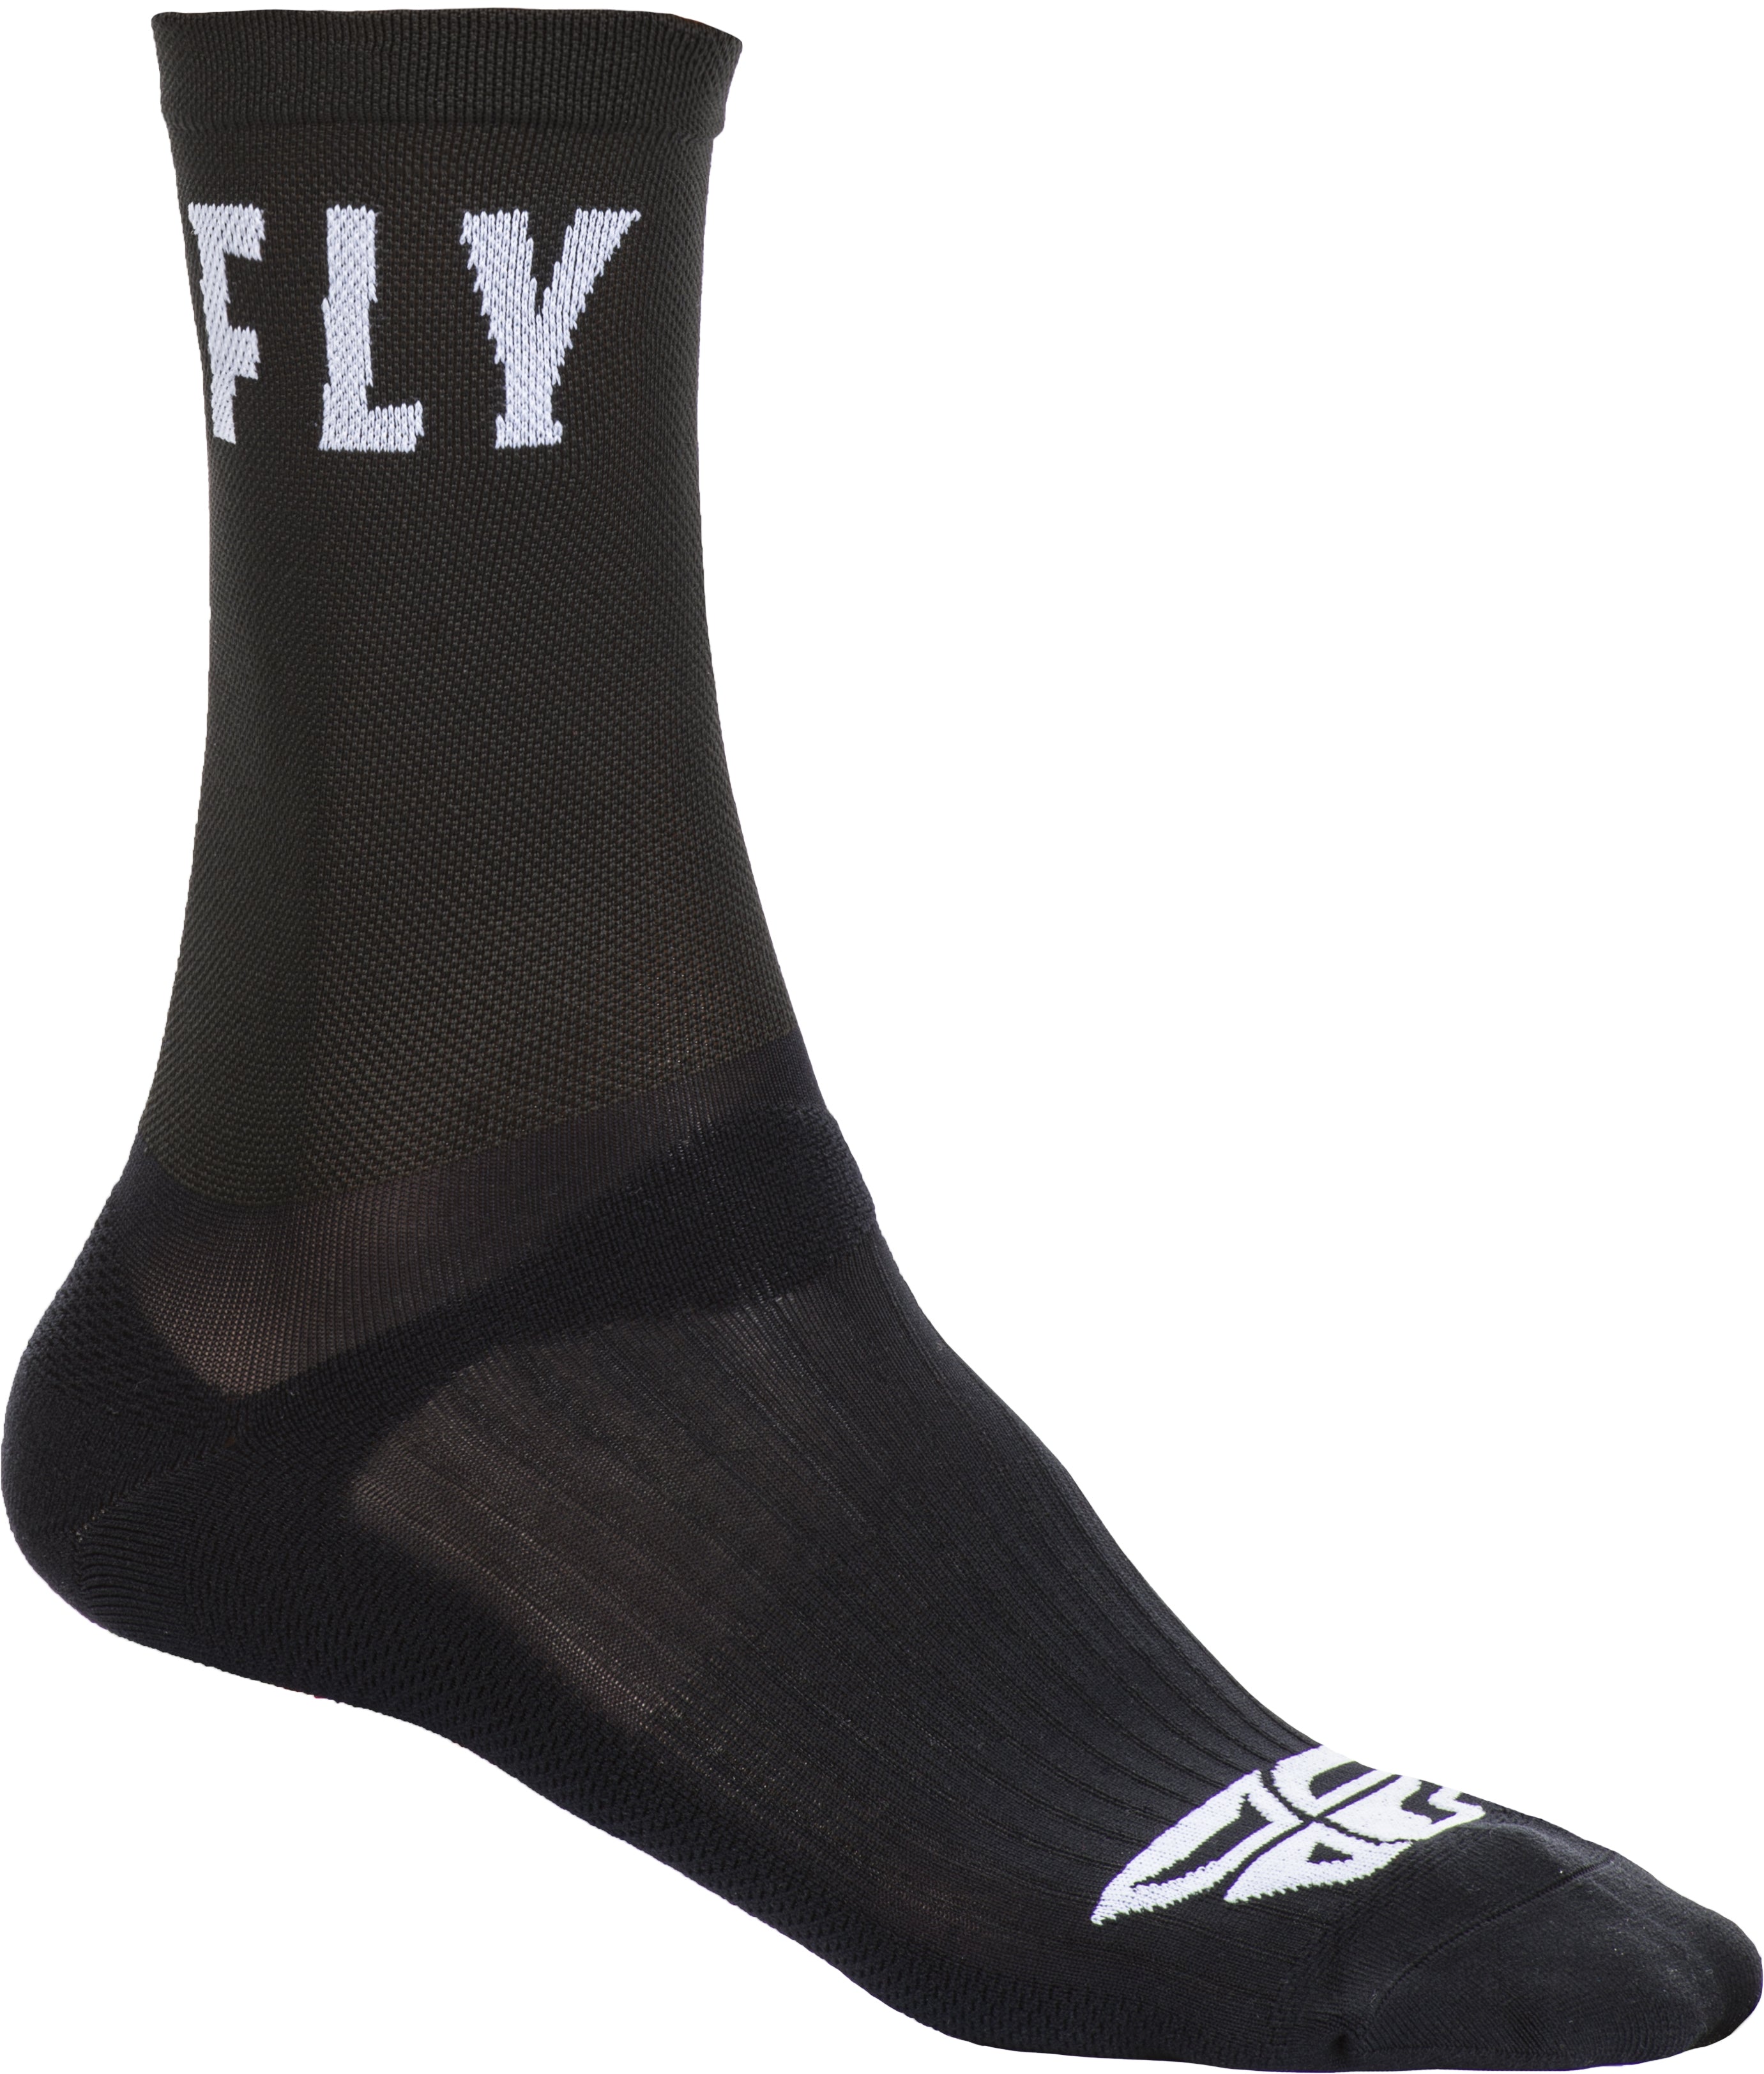 Fly Crew Socks Black Sm/Md